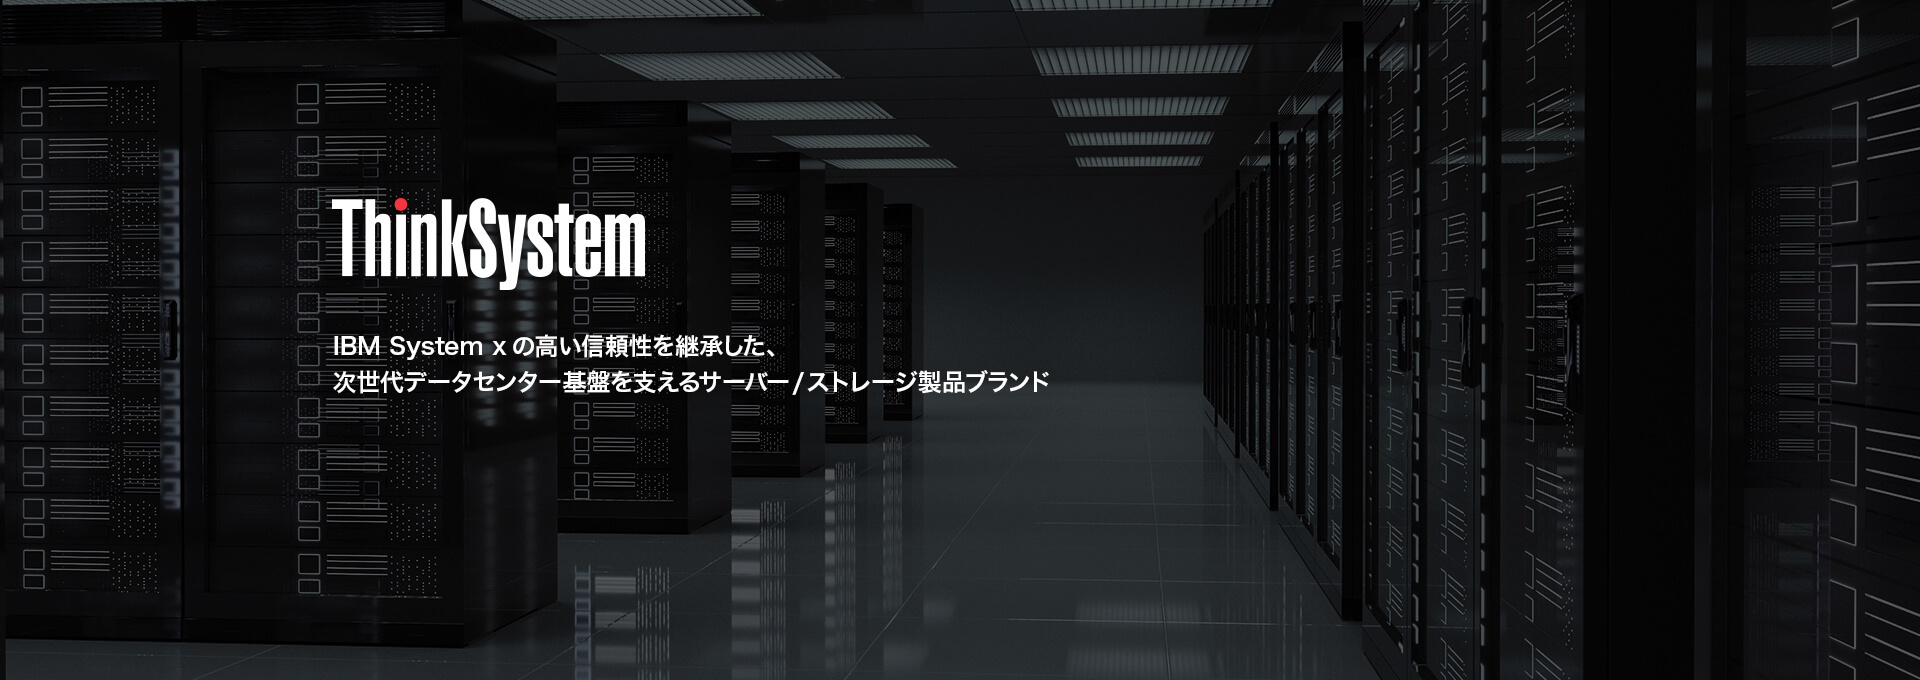 ThinkSystem｜IBM System xの高い信頼性を継承した、次世代データセンター基盤を支えるサーバー/ストレージ製品ブランド